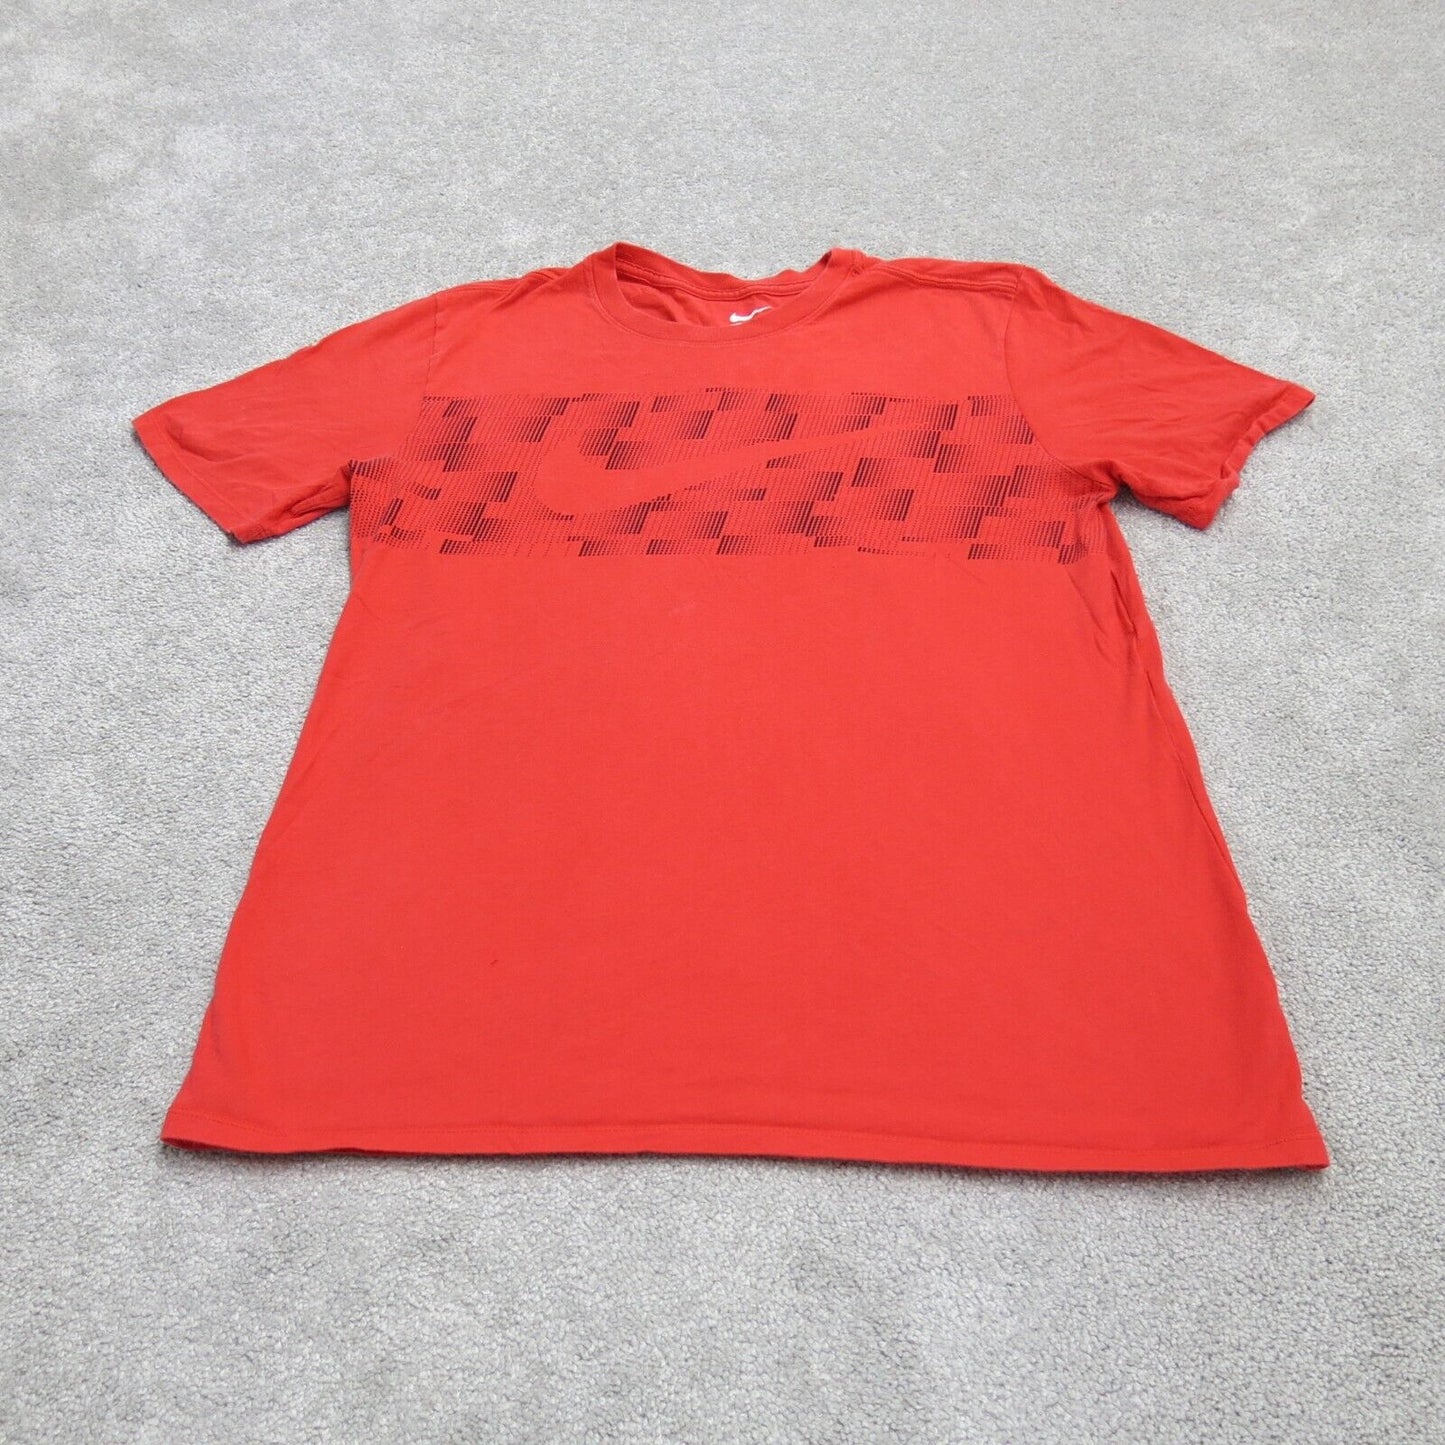 The Nike Tee Men Crew Neck T Shirt Short Sleeves Athletic Cut Tee Red  Medium